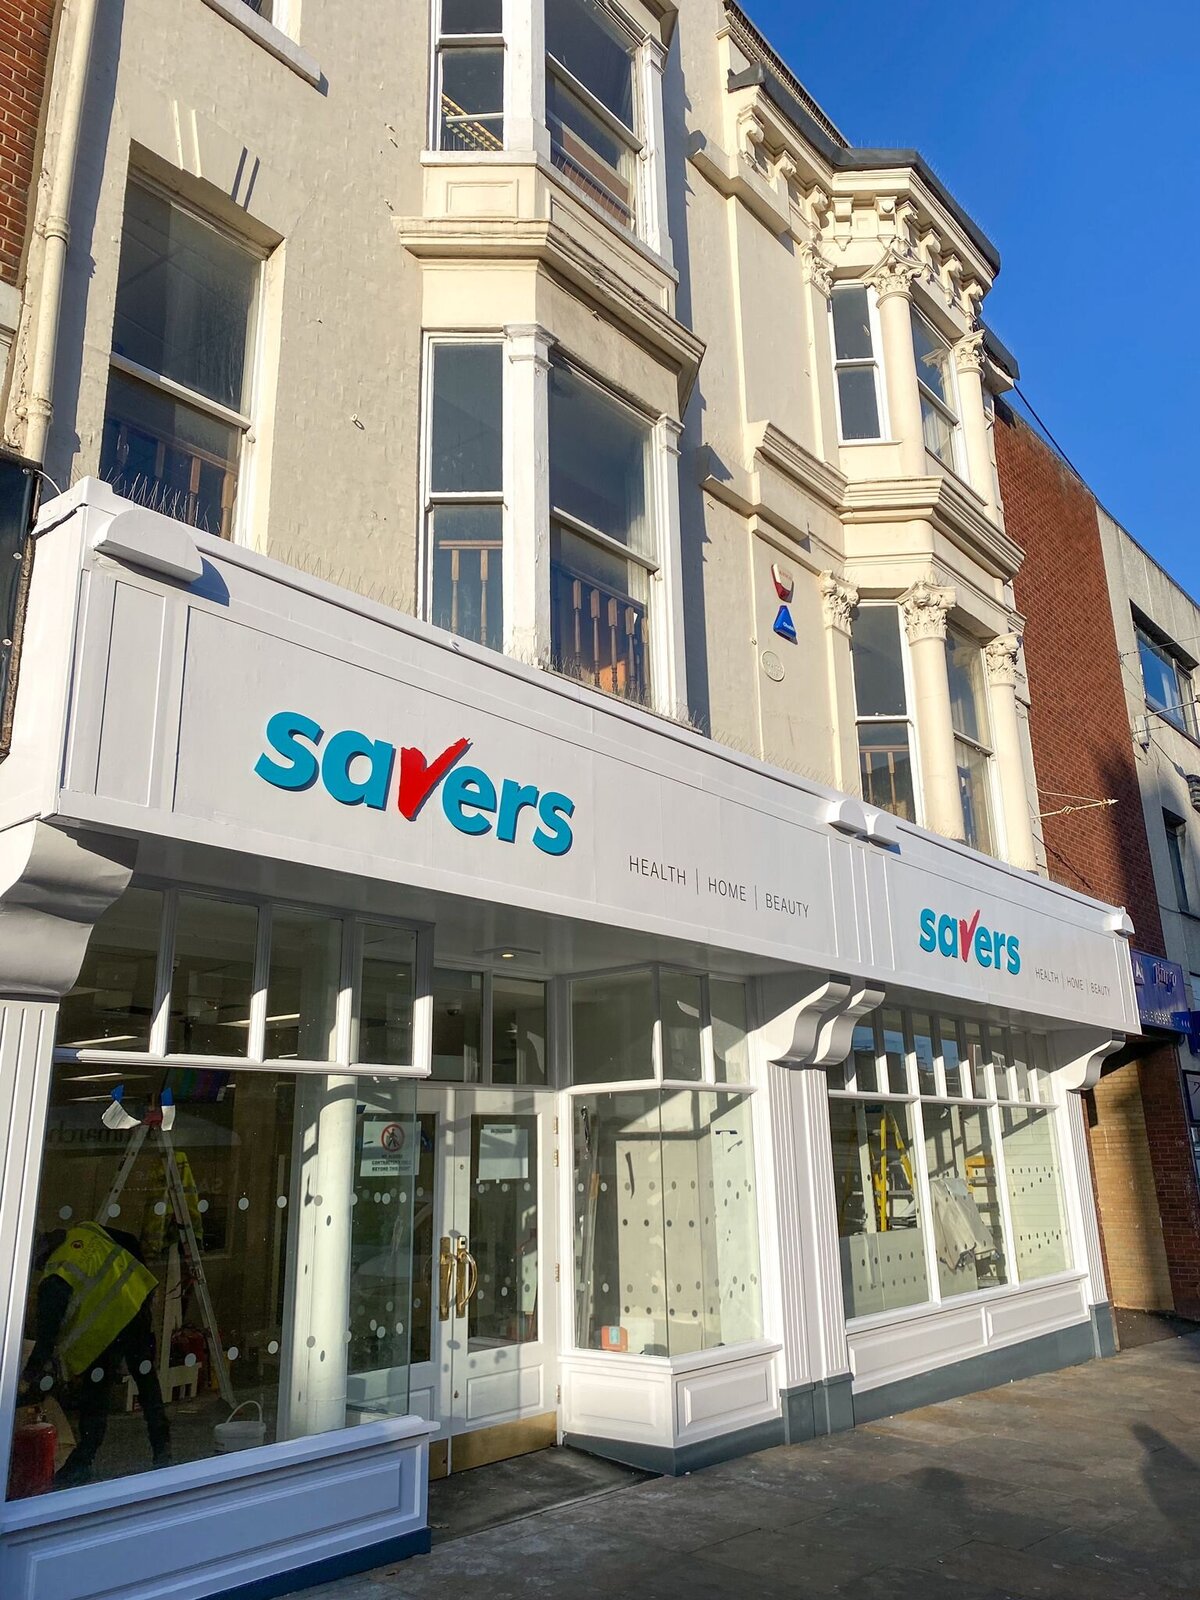 ellis-signs-savers-shop-front-fascia-newcastle-gateshead-north-east